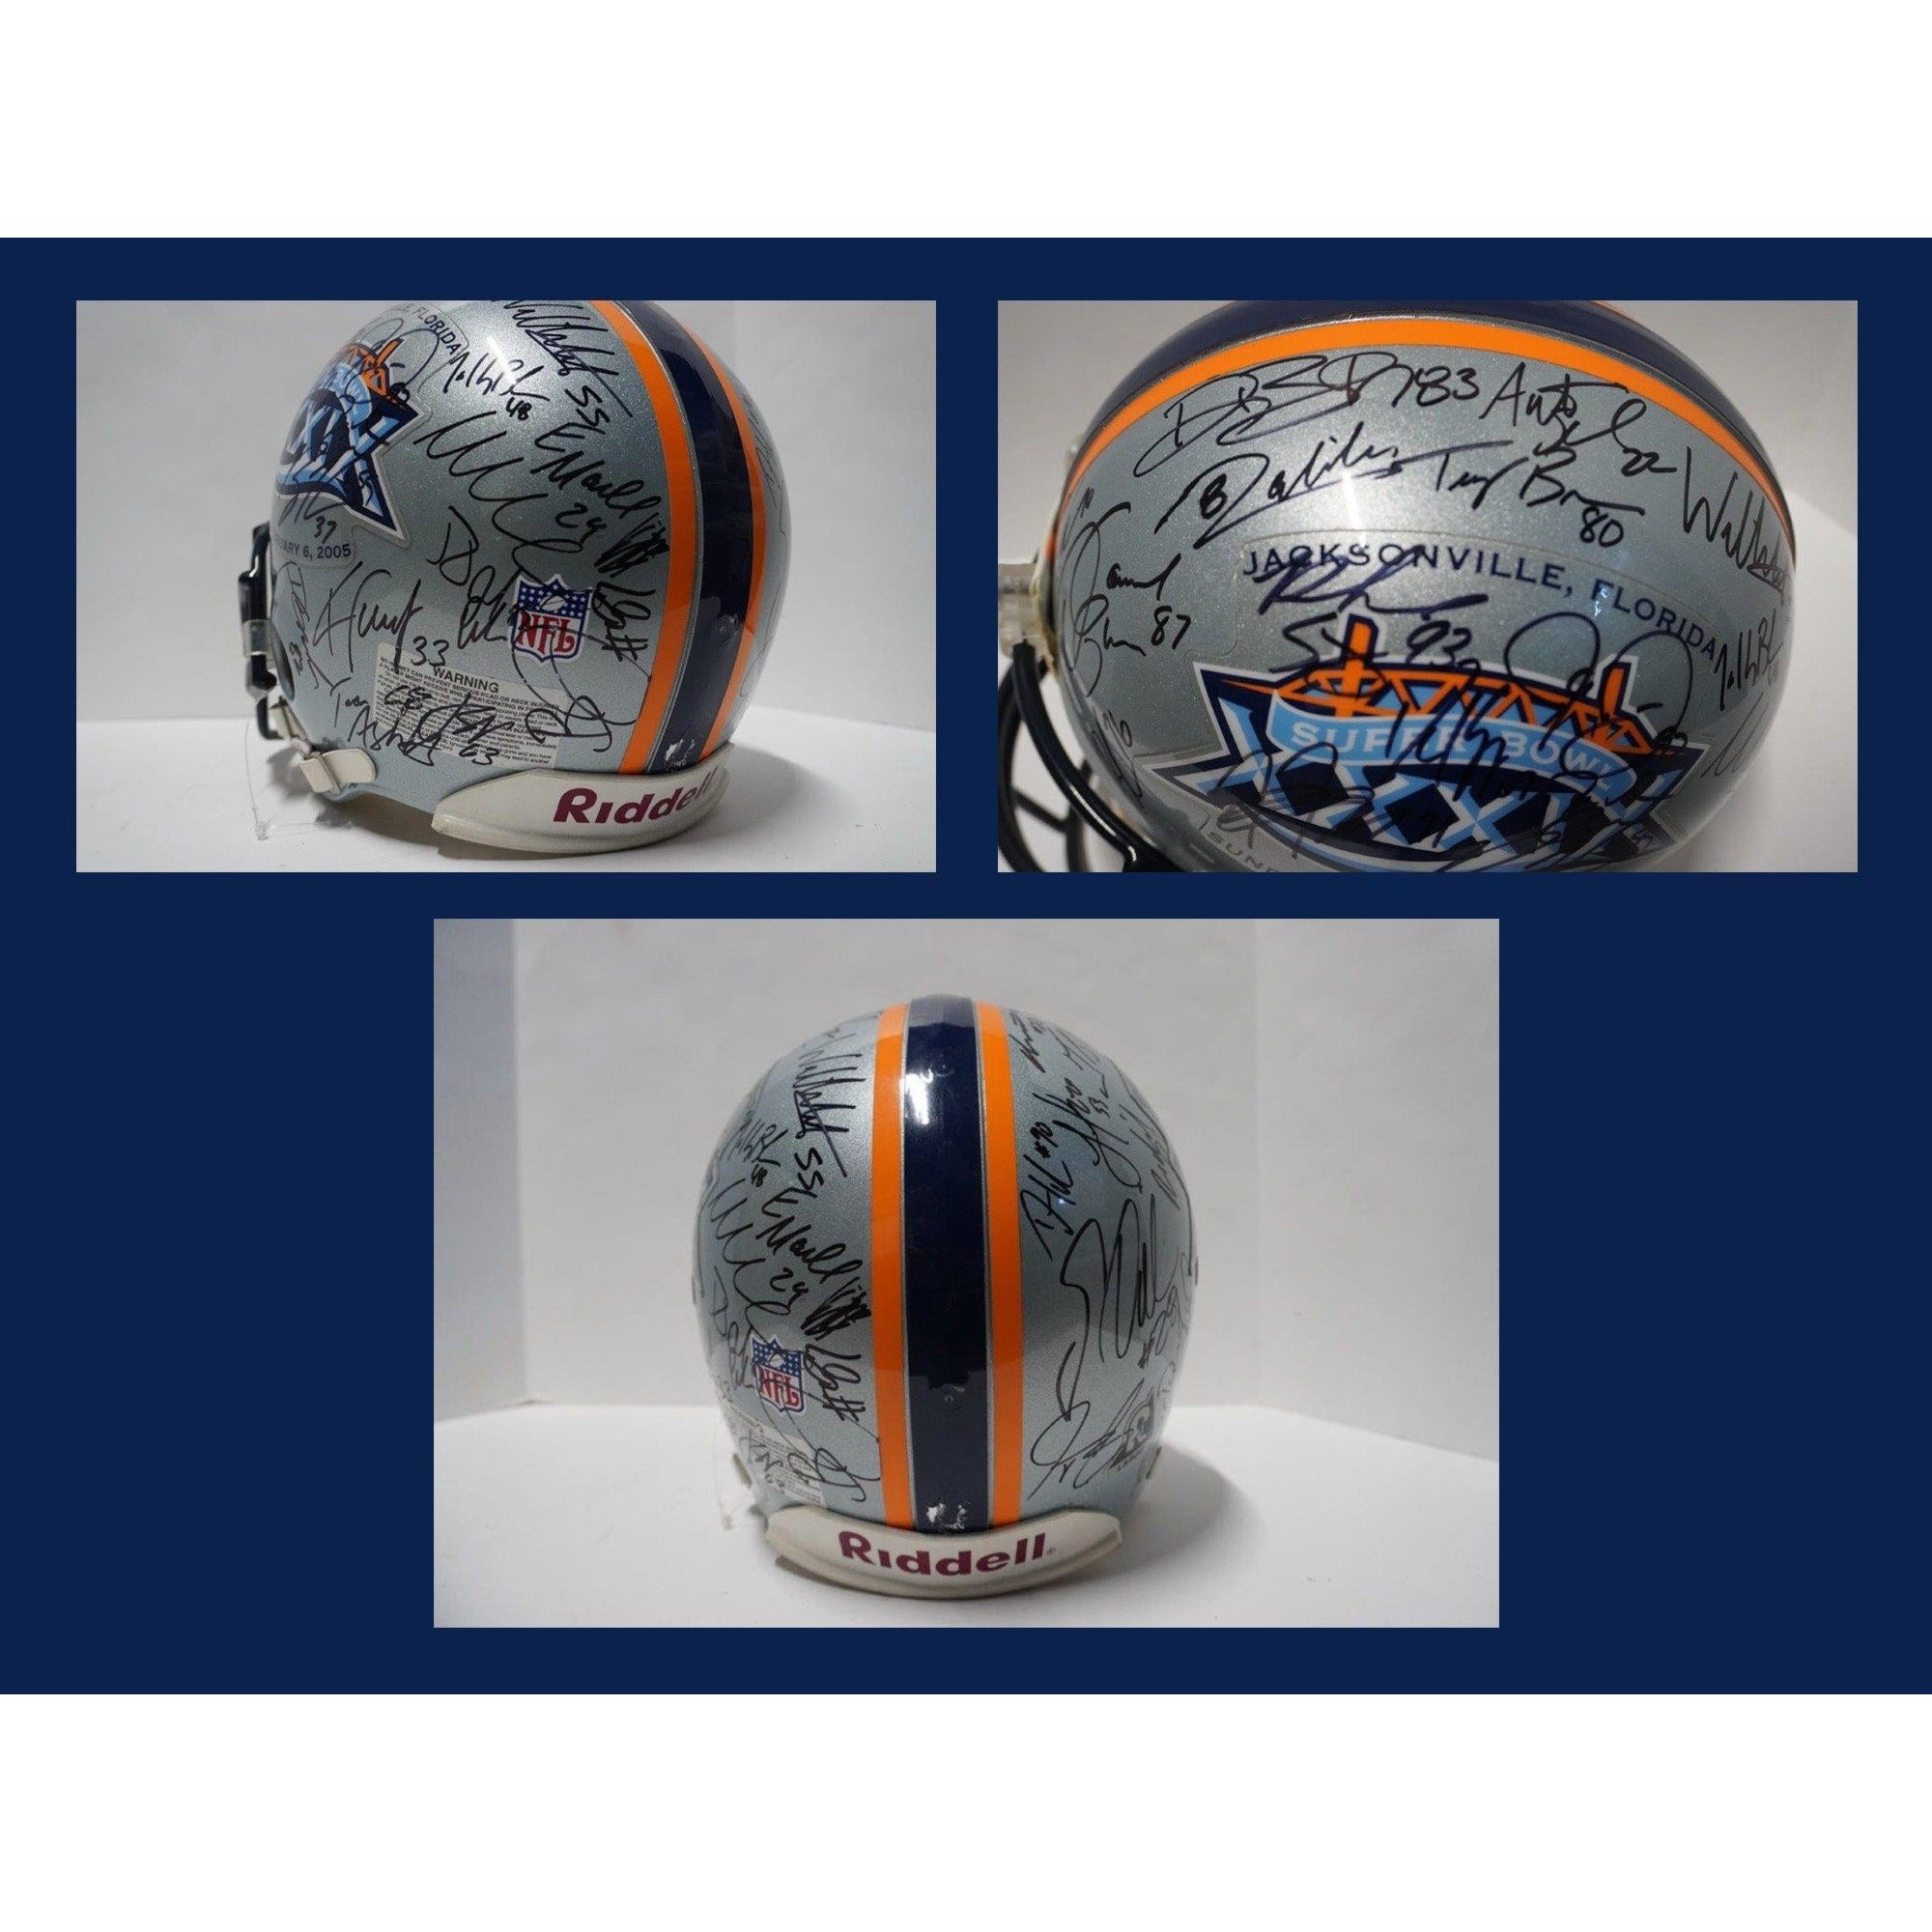 Tom Brady New England Patriots 2004 Super Bowl pro model helmet team signed